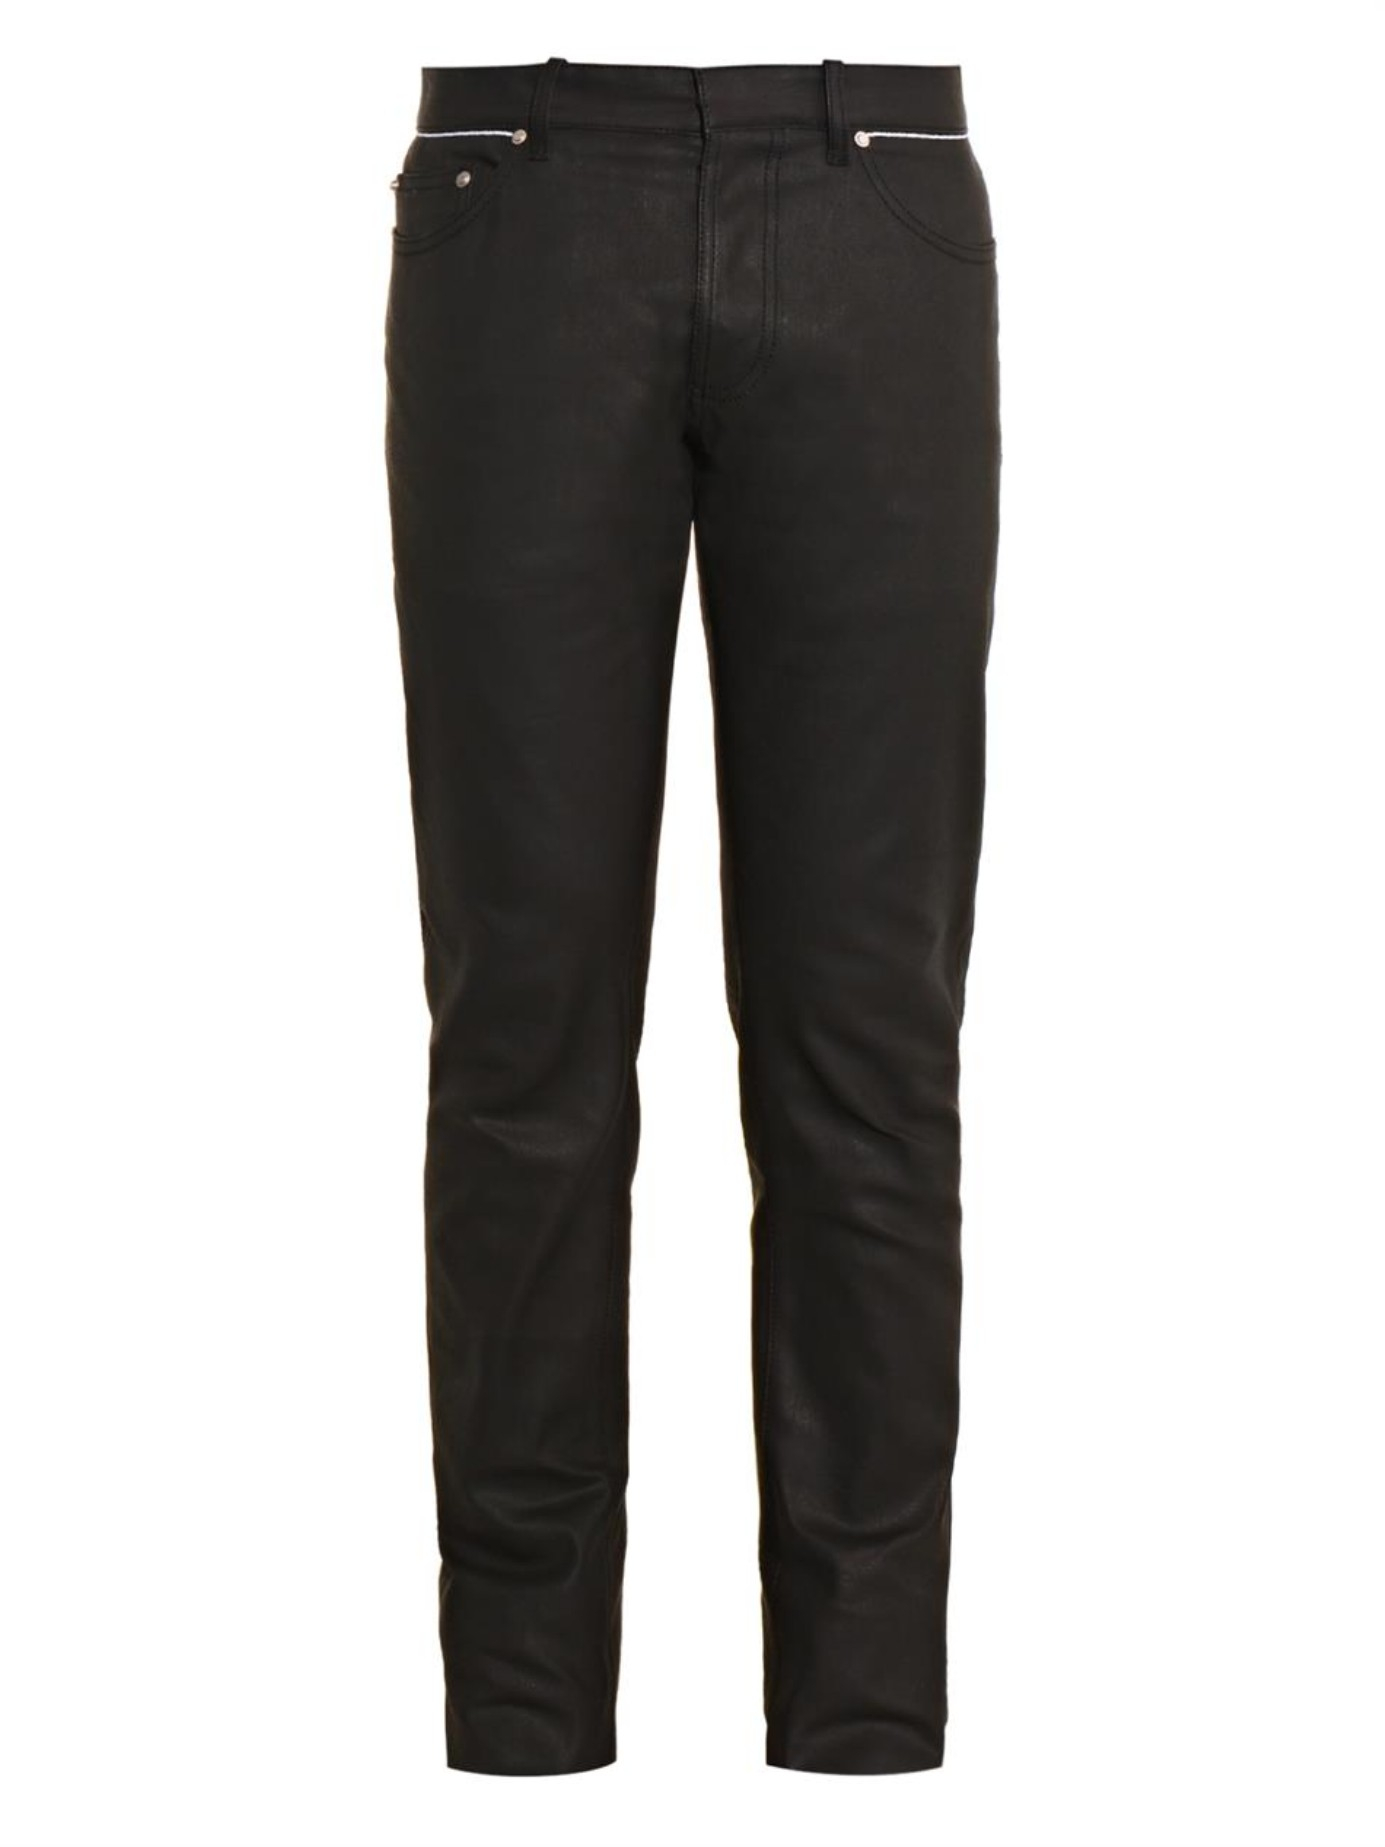 Balenciaga Coated-Denim Skinny Jeans in Black for Men - Lyst